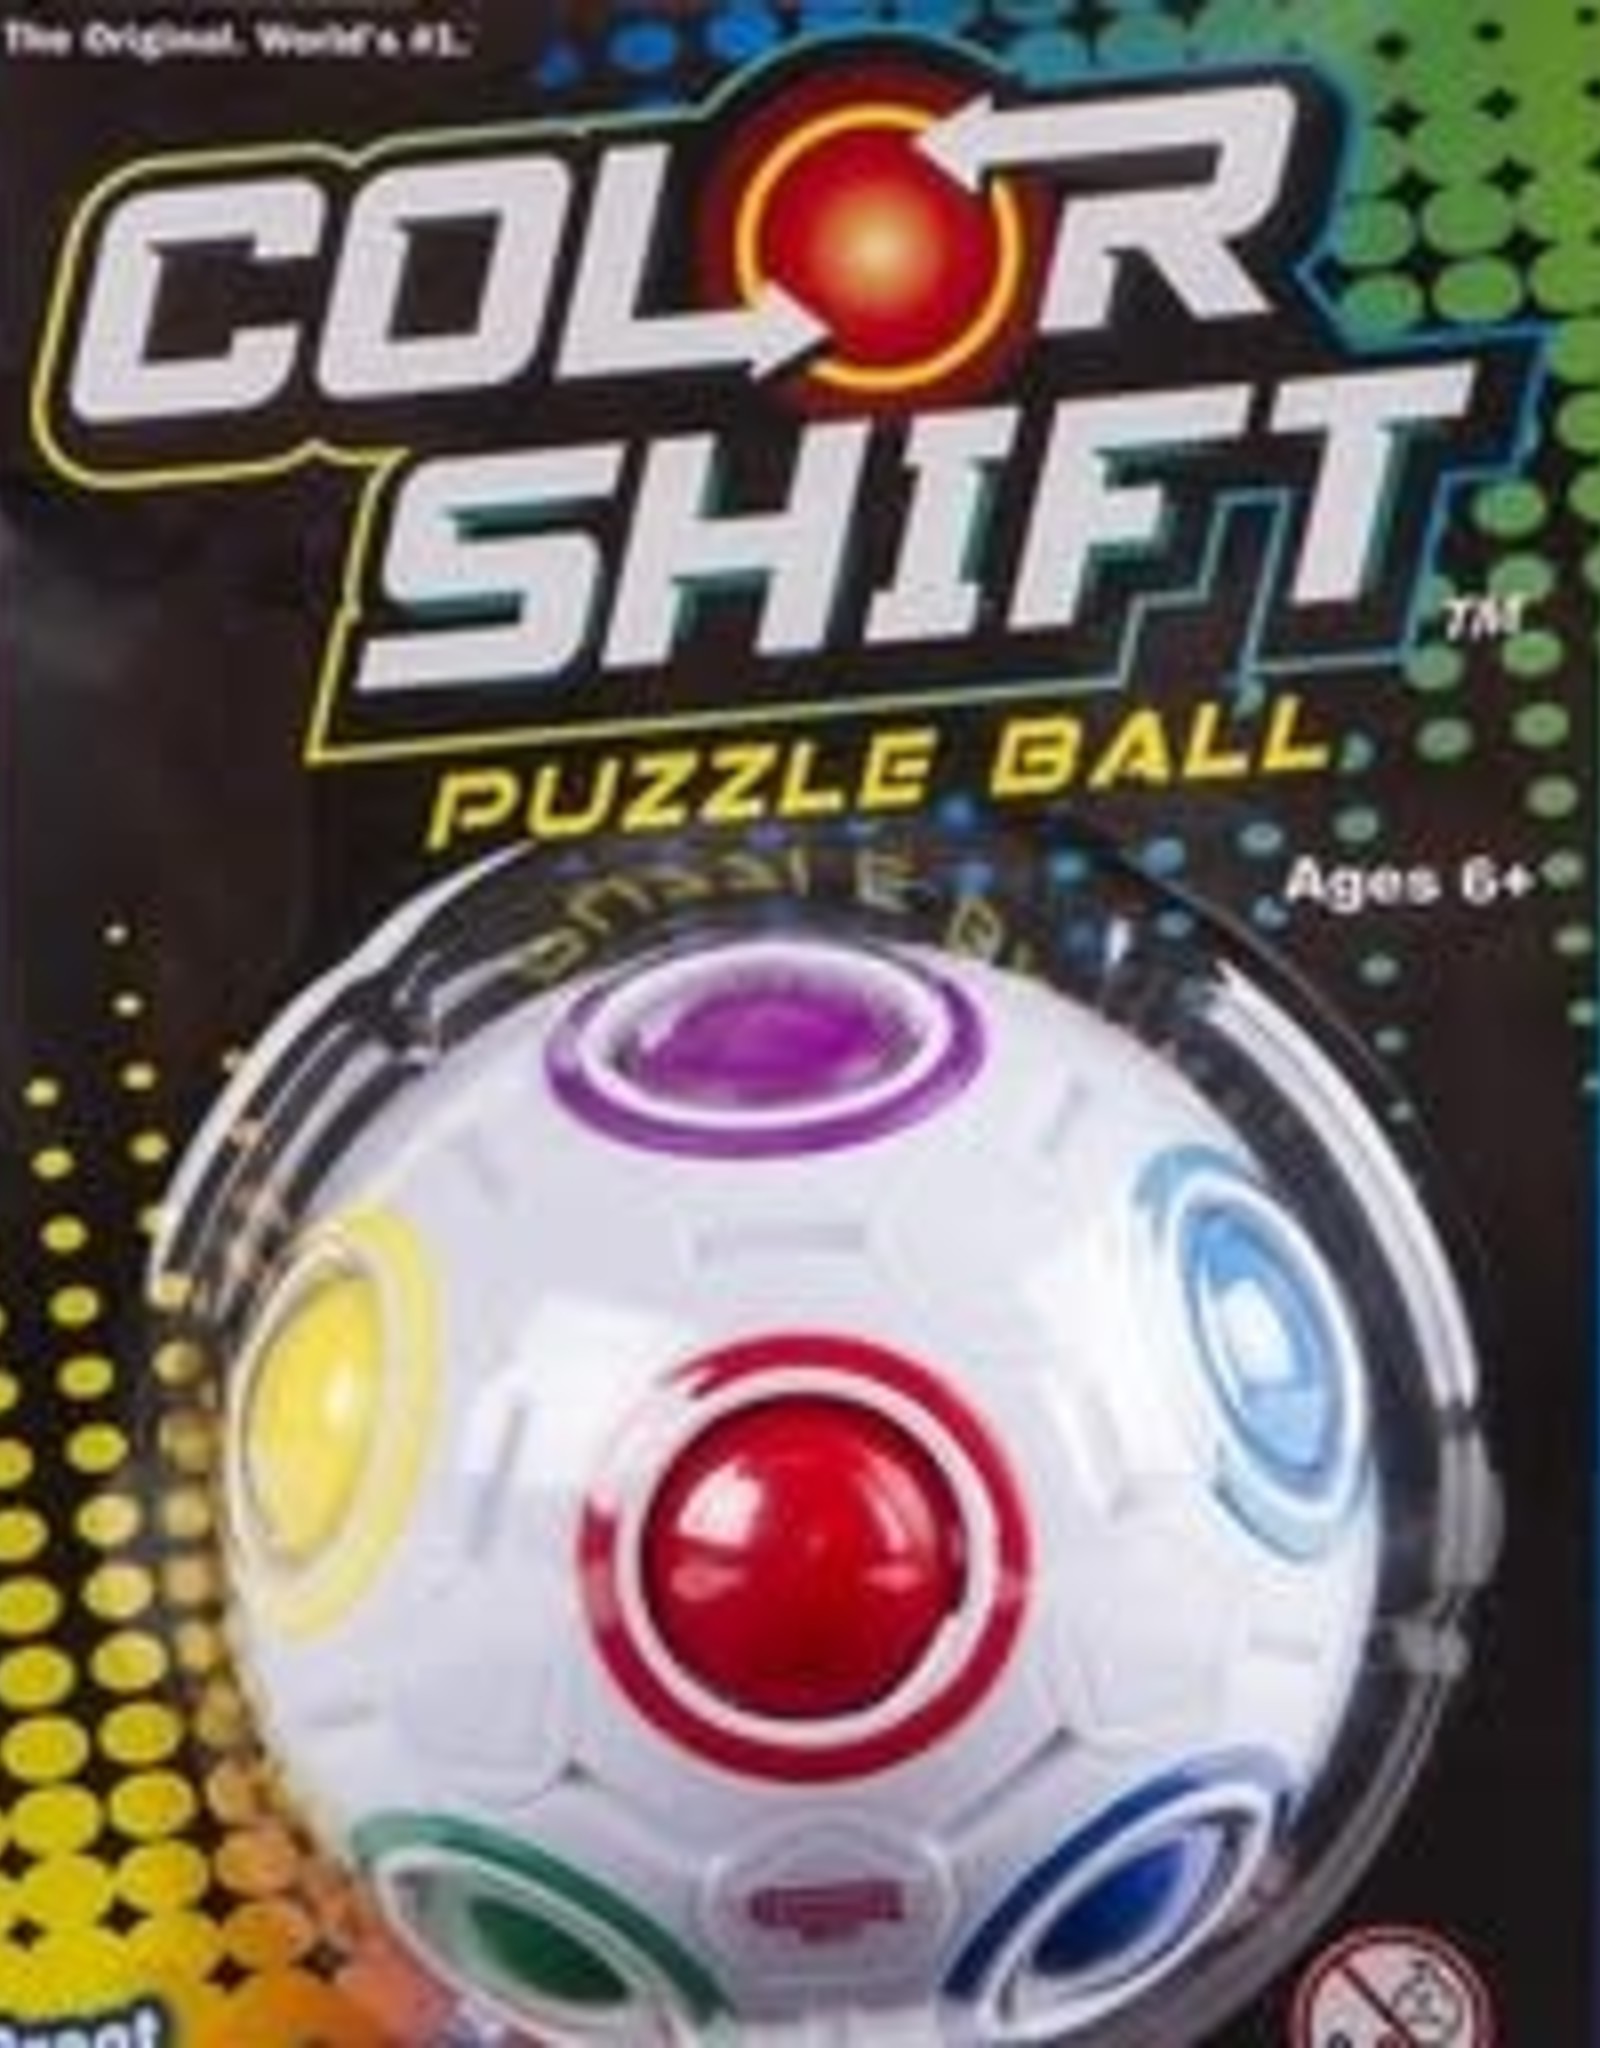 Duncan Color Shift Puzzle Ball